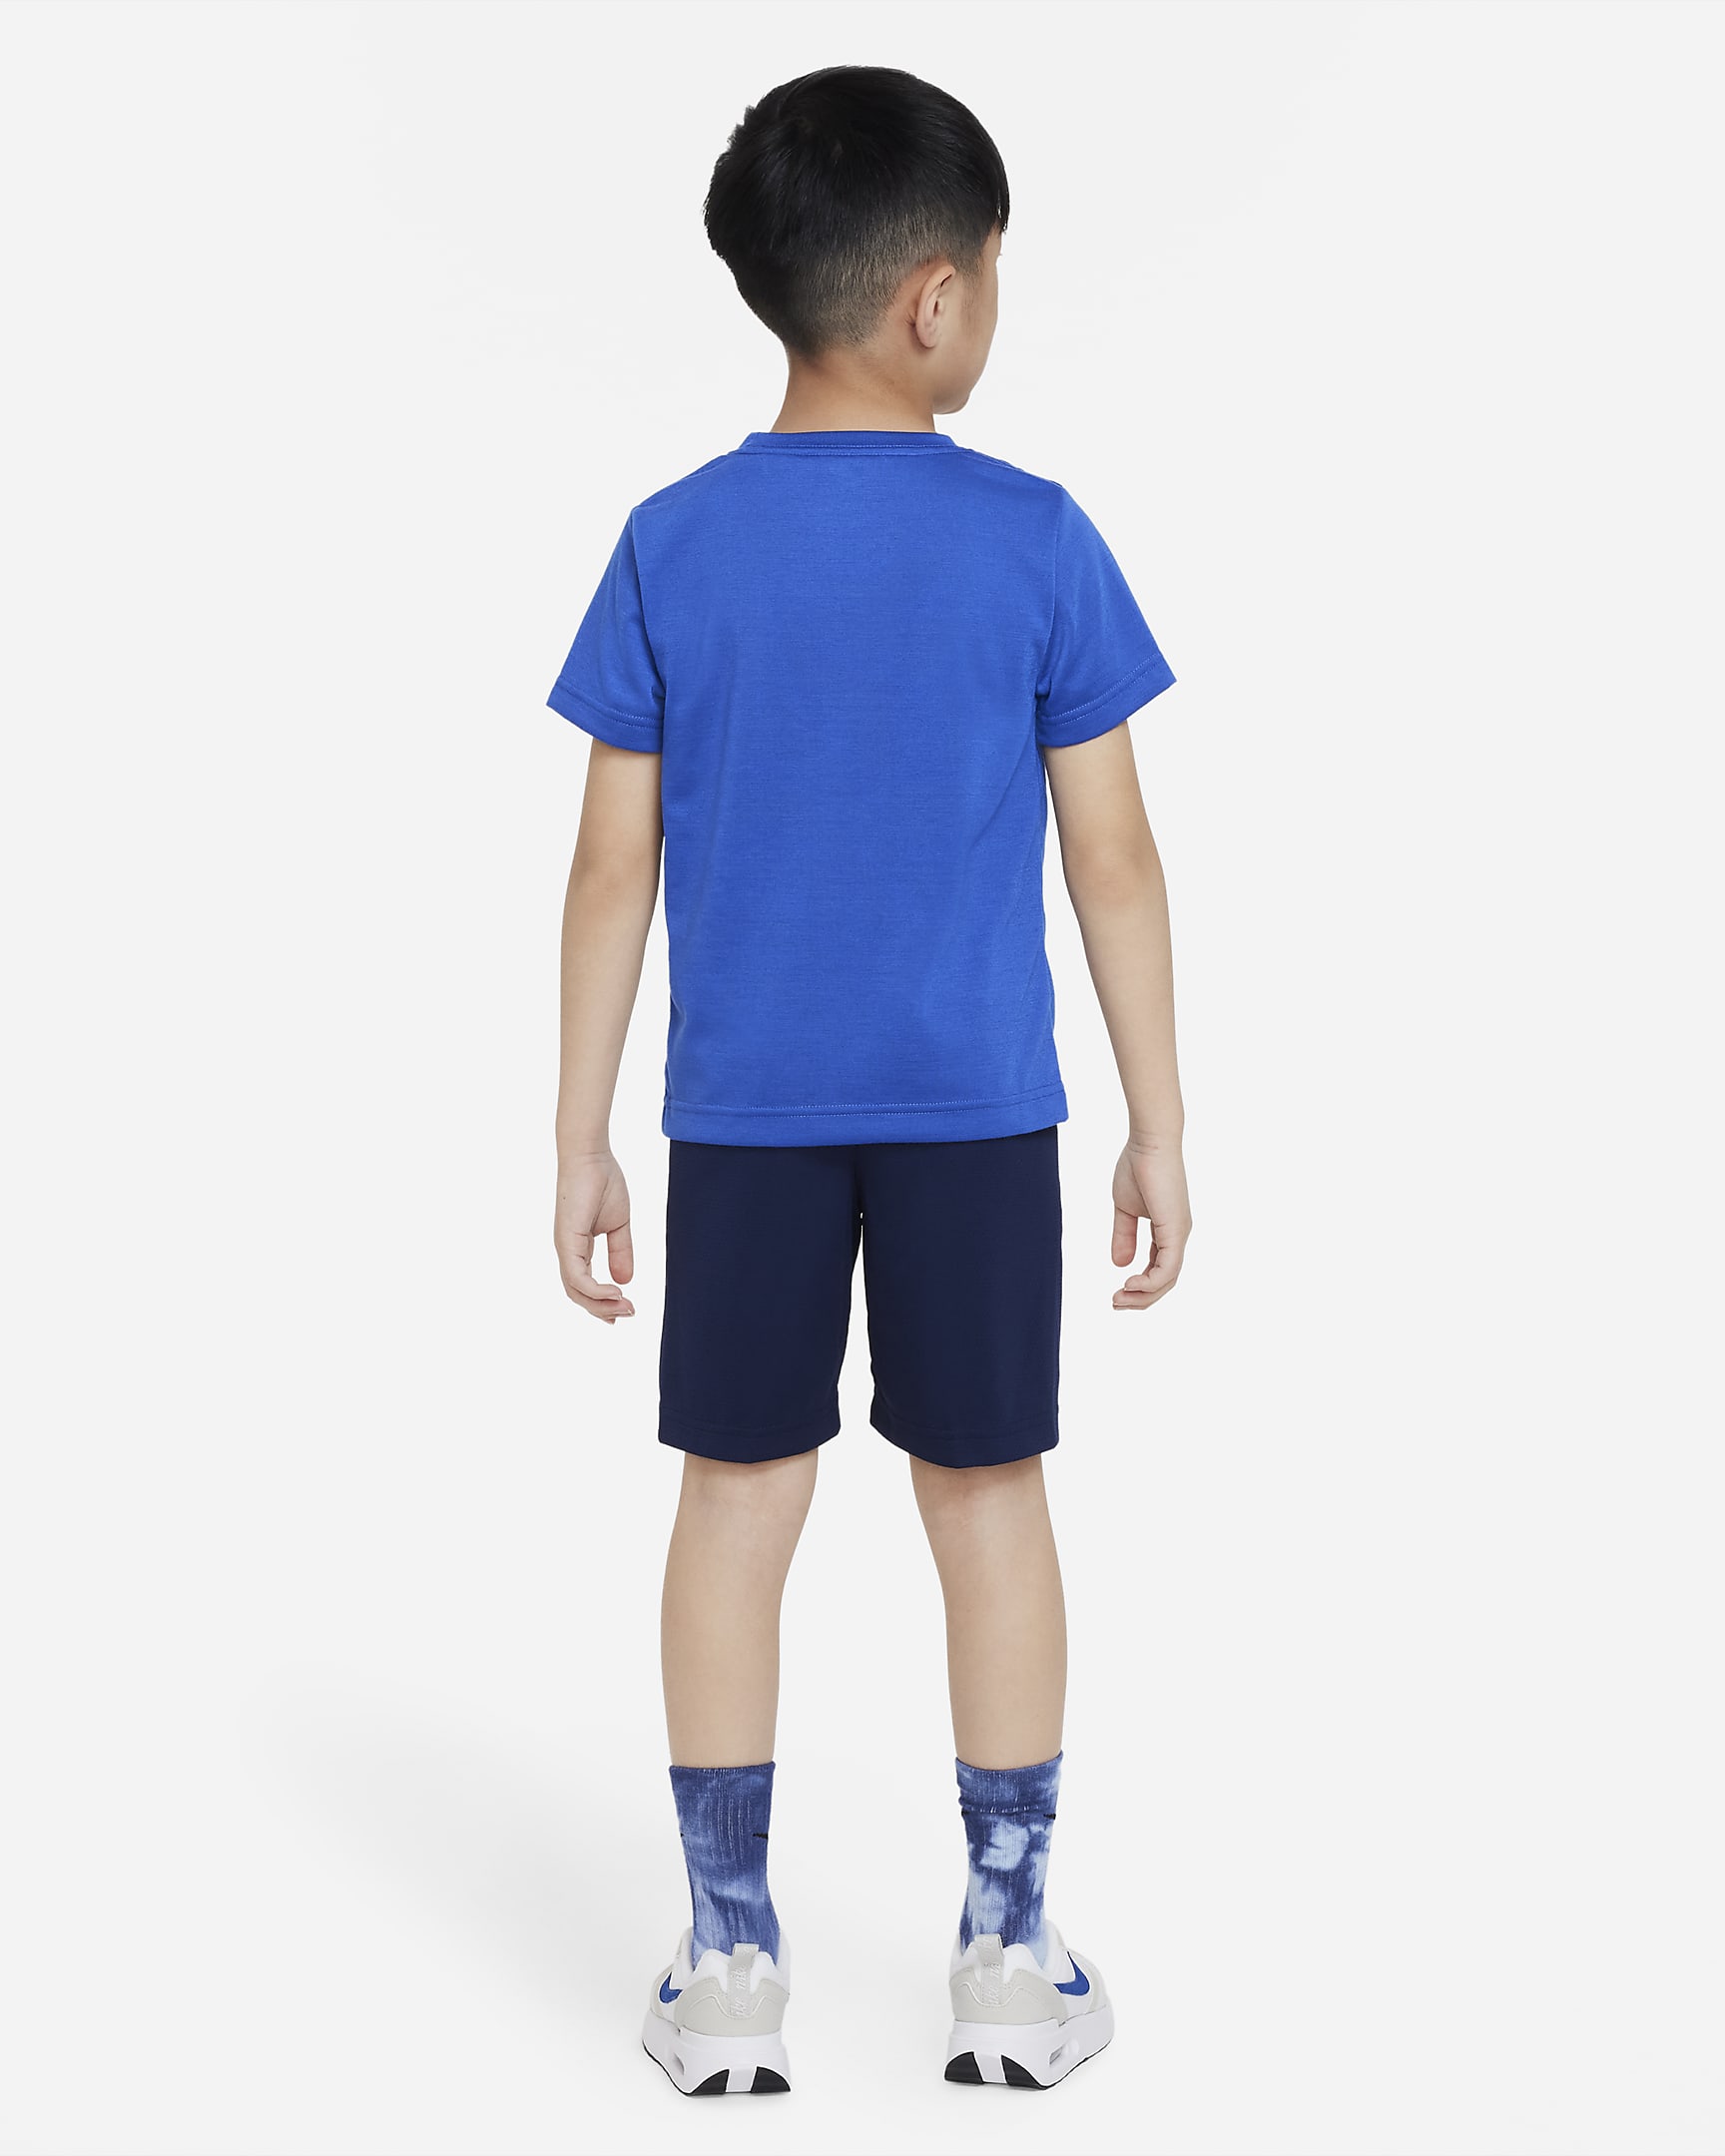 Nike Little Kids' Daze Recycled T-Shirt and Shorts Set. Nike.com